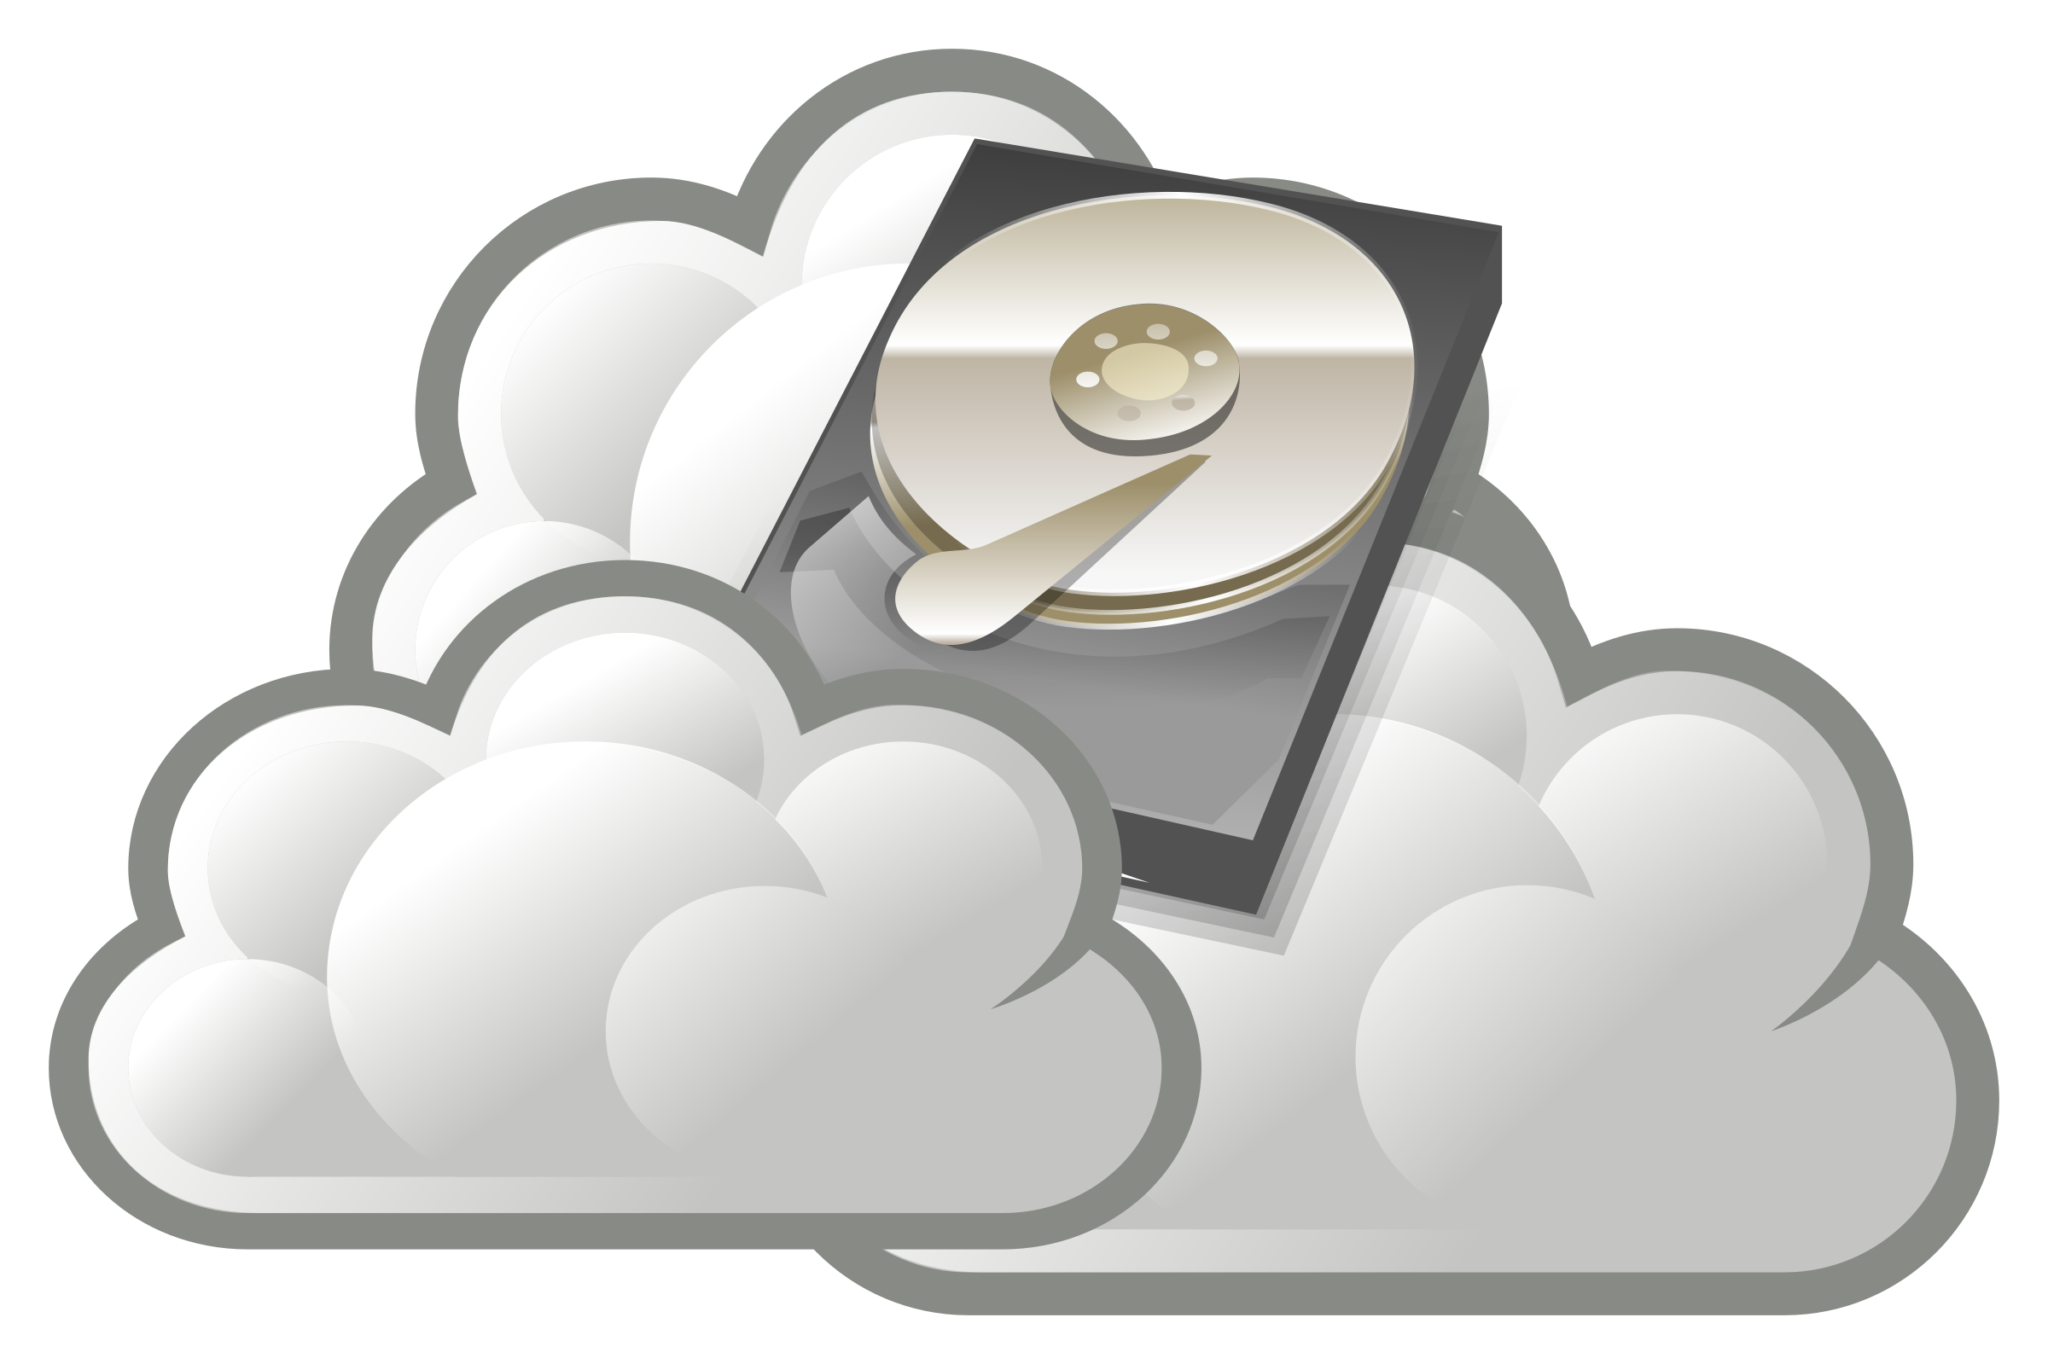 Cloud Drive SACKO Brisbane's Best Cloud Drive Storage